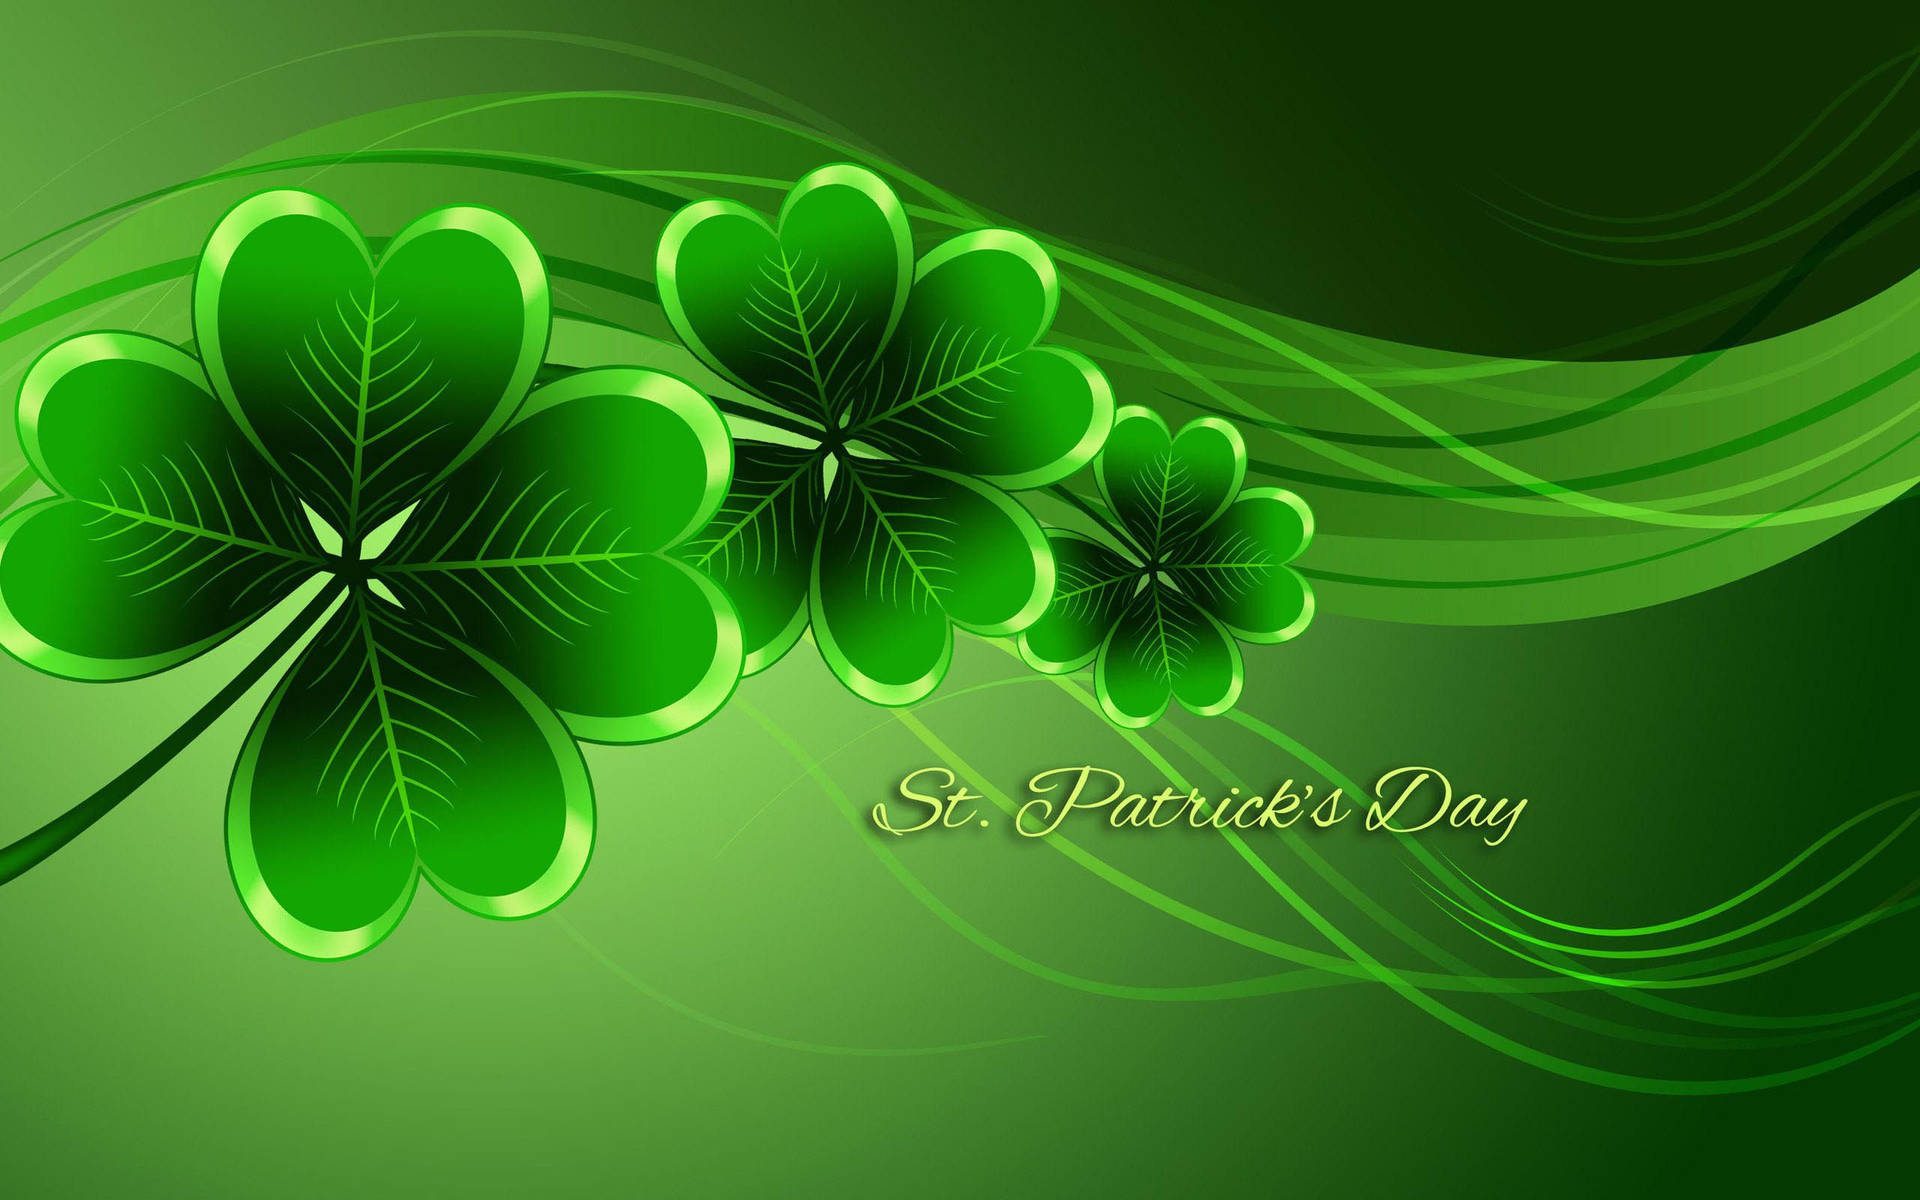 St Patrick's Day Clover Digital Art Background